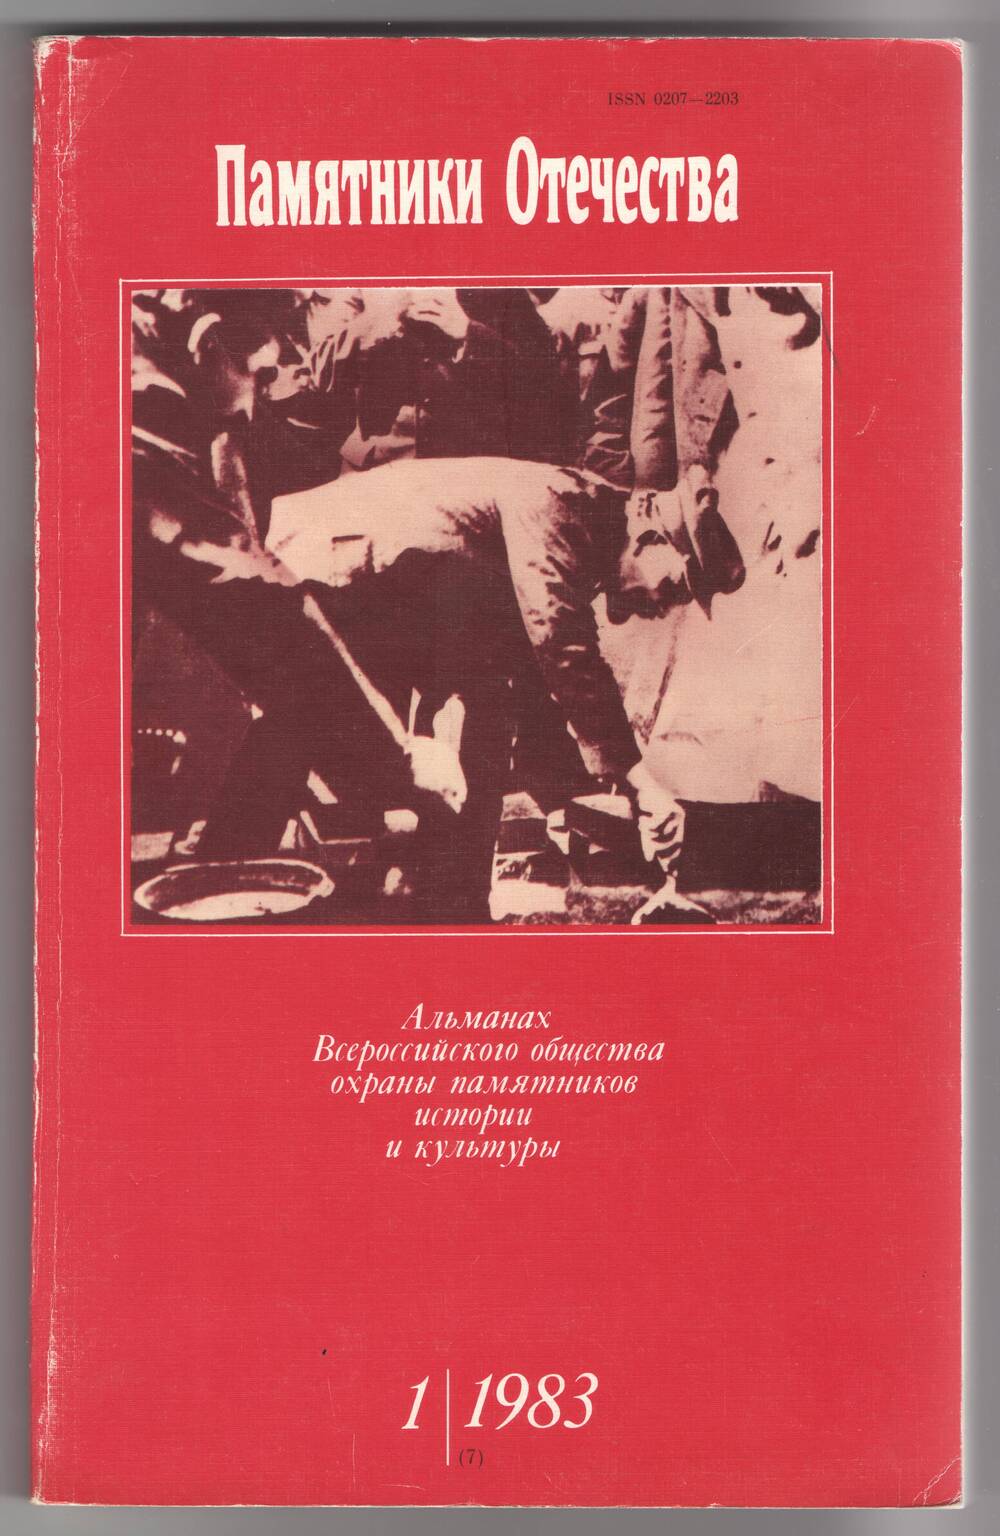 Журнал. Альманах «Памятники Отечества» №1,(7) 1983 г.